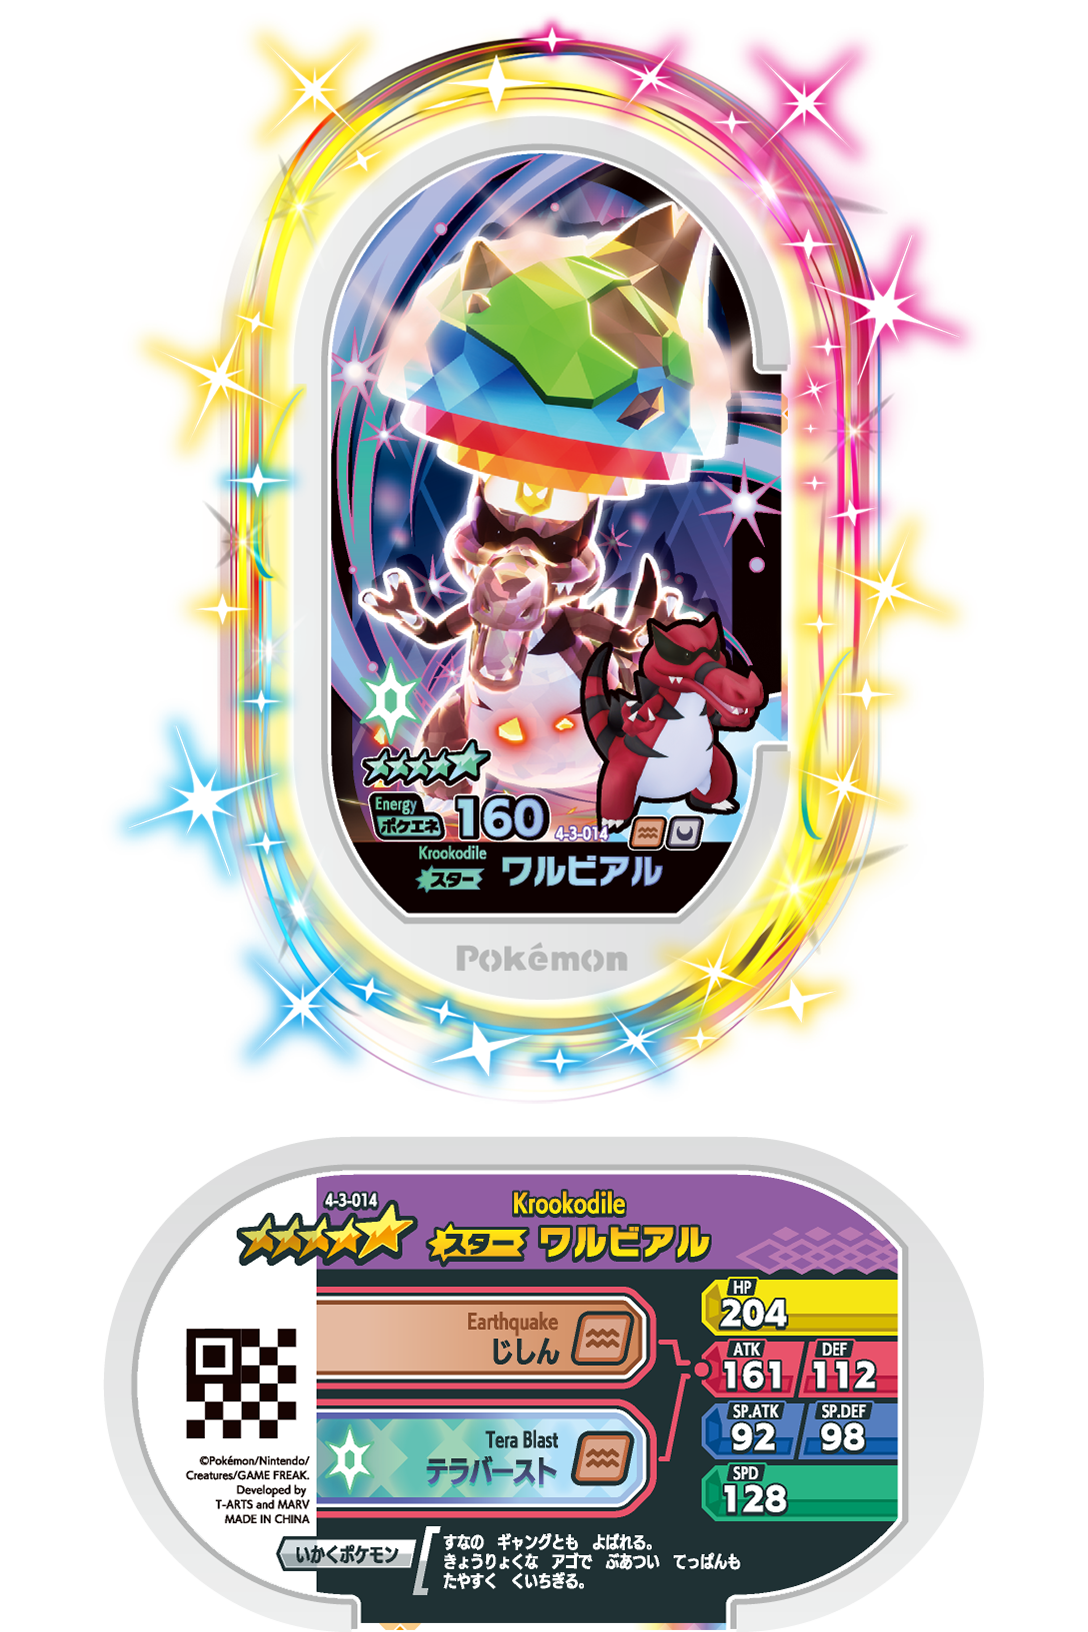 Miraidon ex PR-SV 28  Pokemon TCG POK Cards